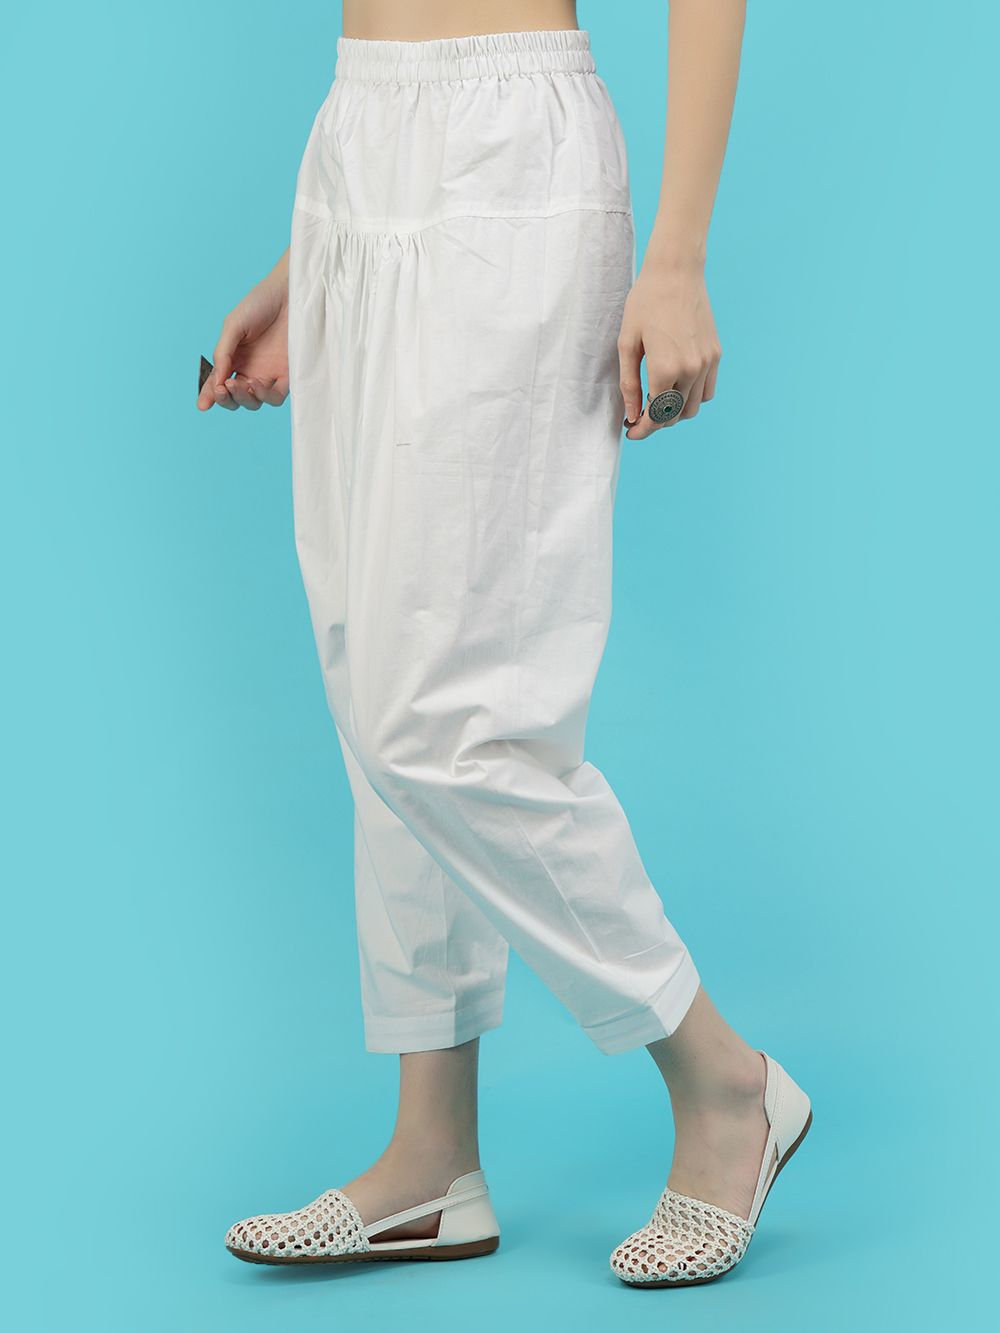 White Cotton Casual Pants